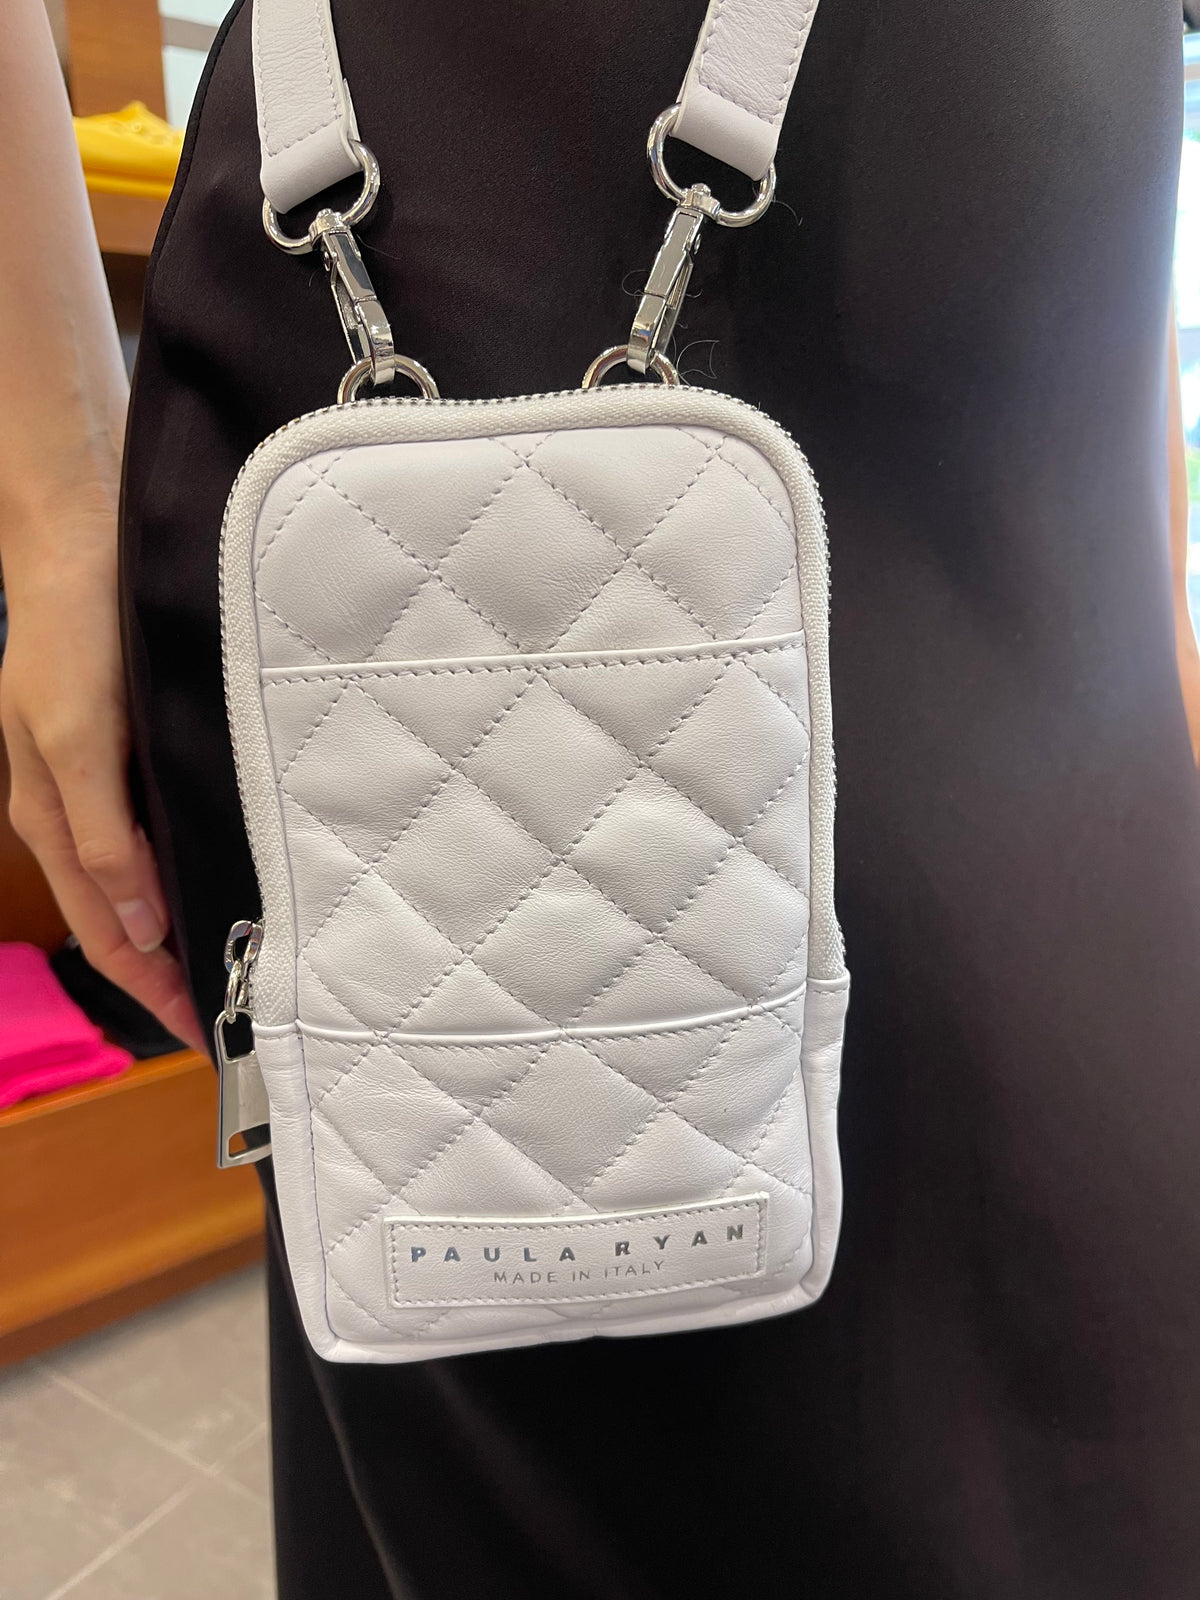 Paula Ryan Quilted Mobile Shoulder Bag - White/Nickel